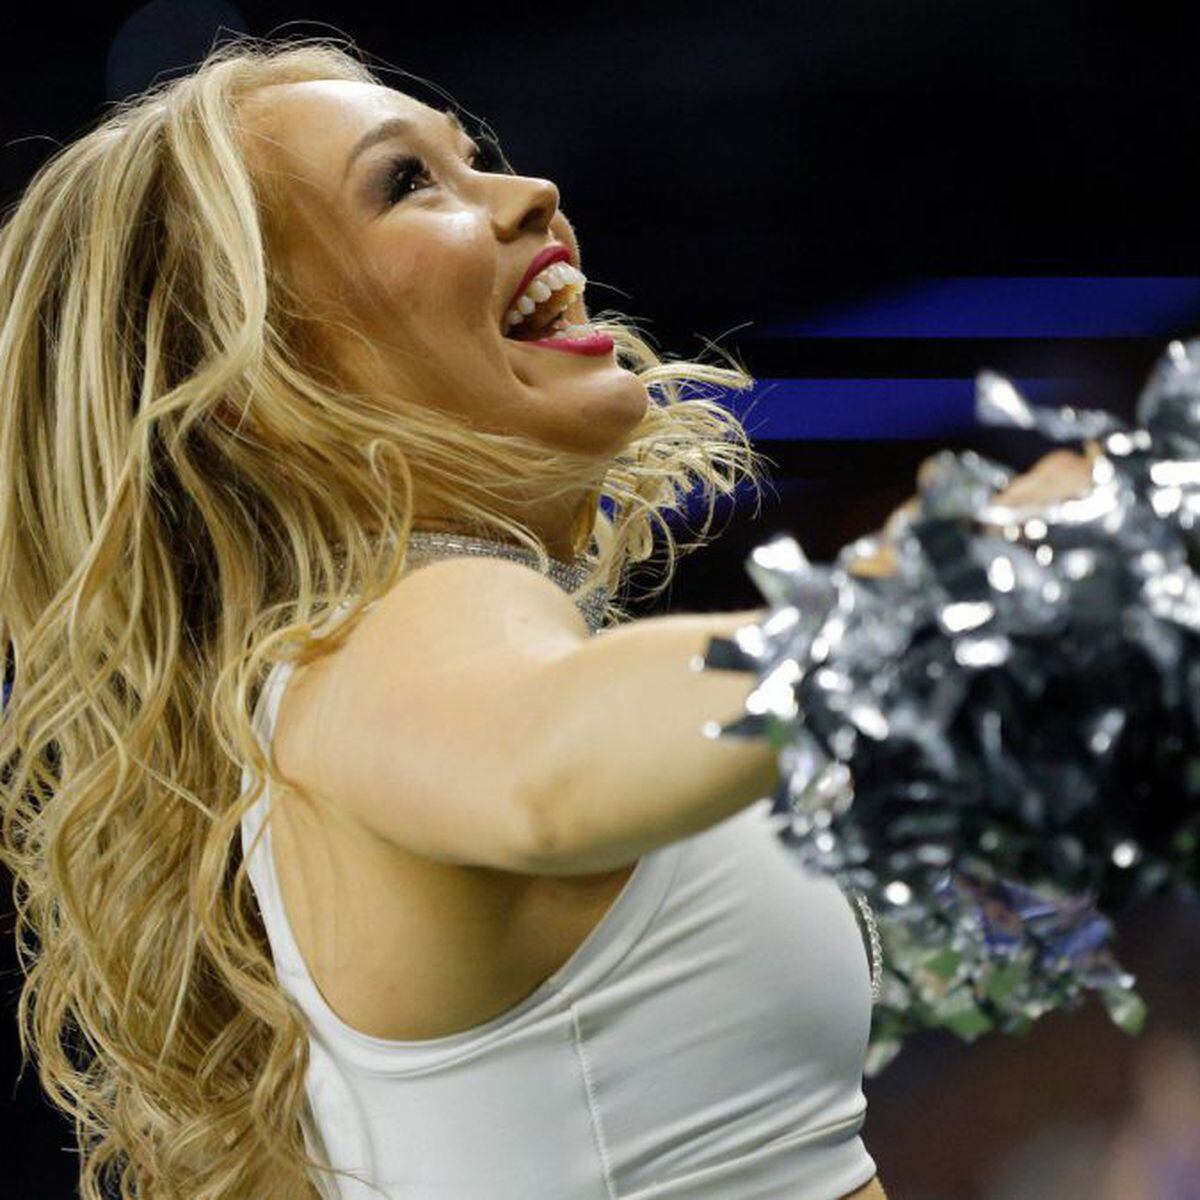 NFL 2022: Cheerleaders paid $3.3 million, changeroom filming